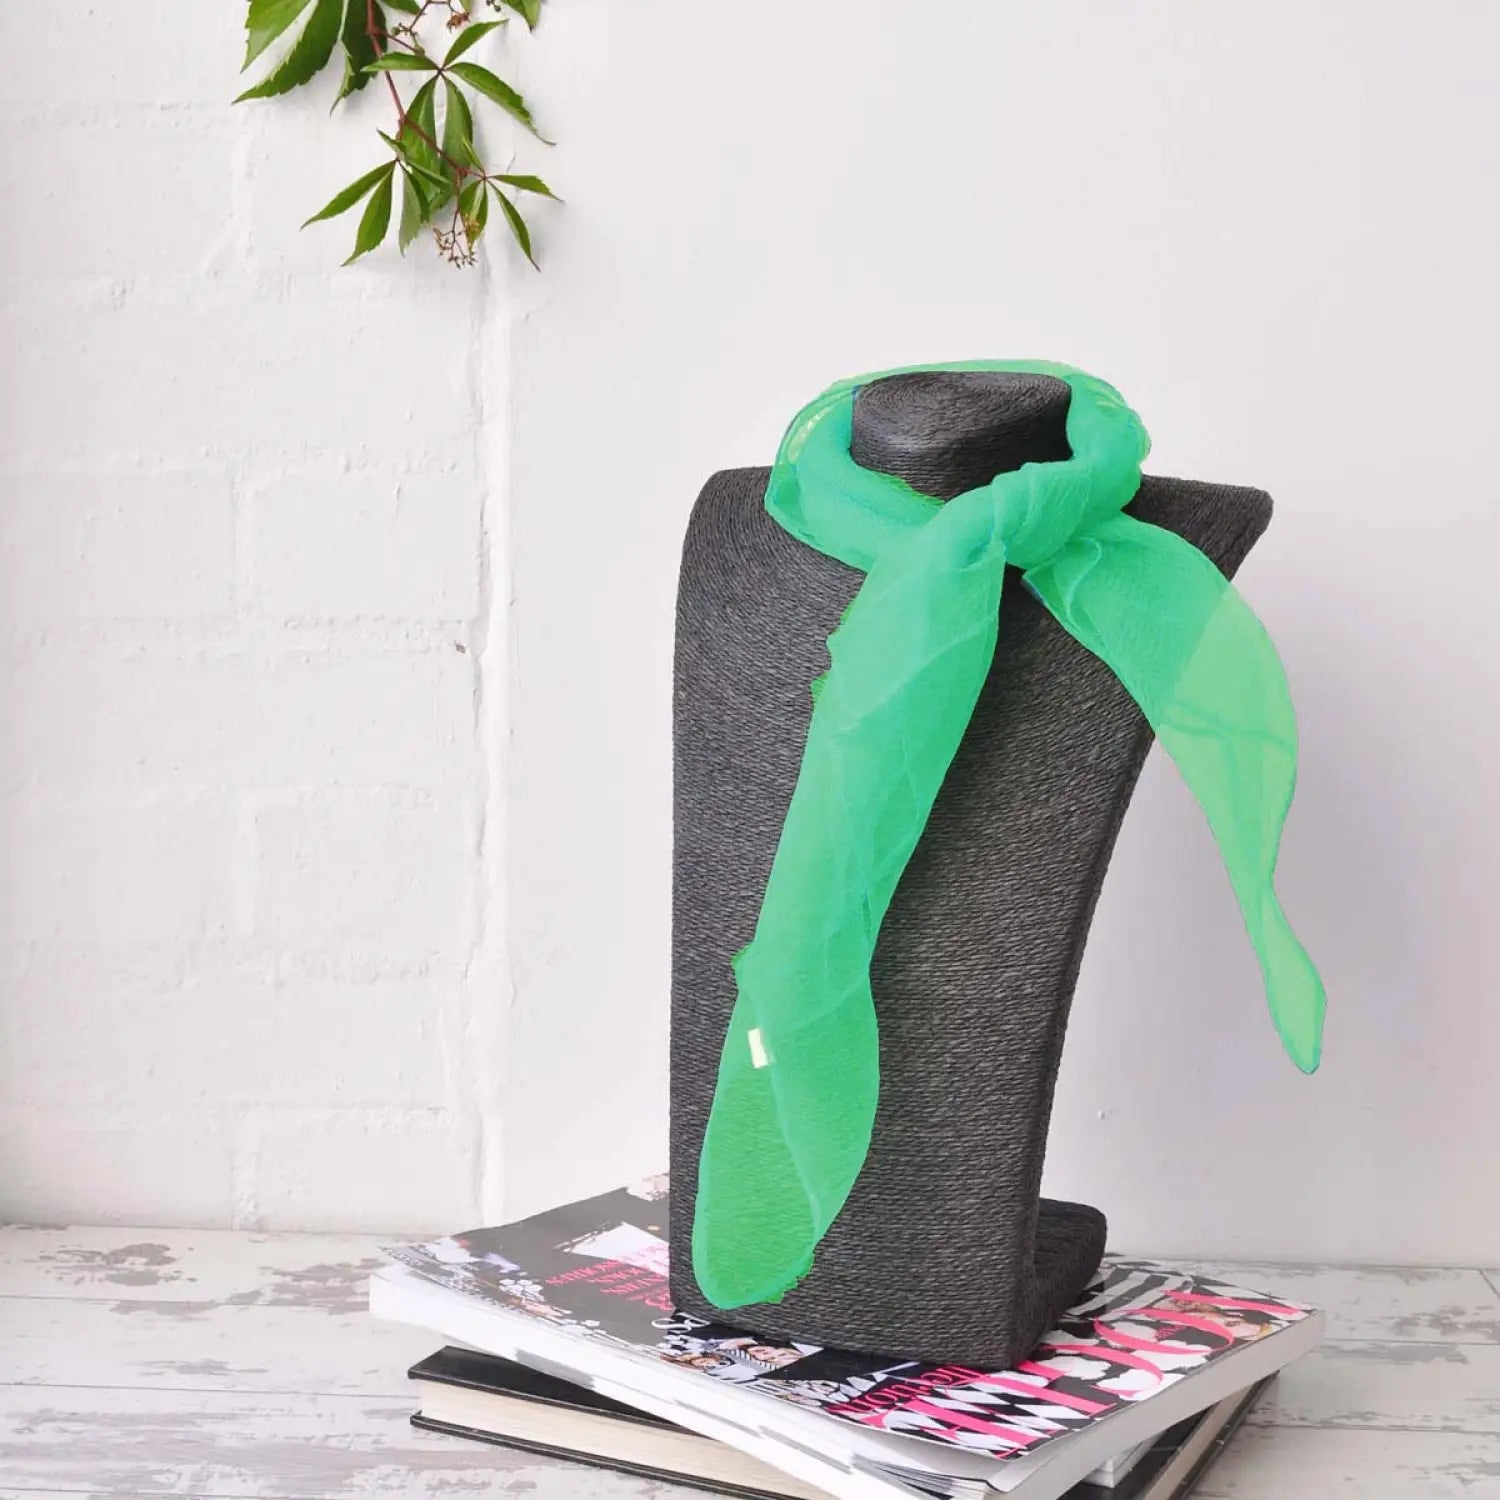 Green chiffon square scarf displayed on grey chair